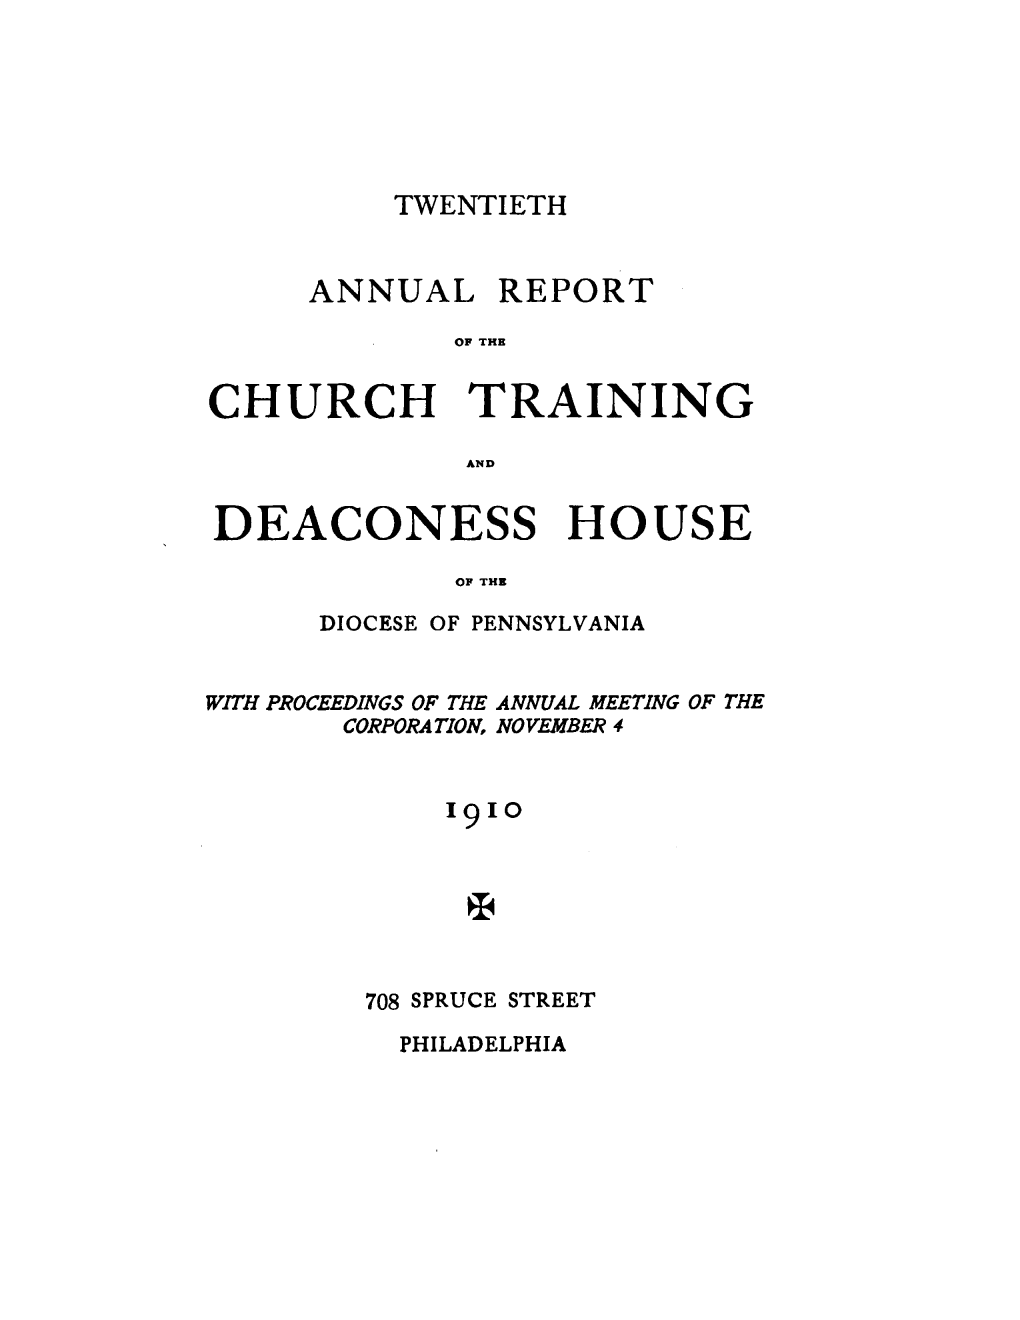 Church Training Deaconess House